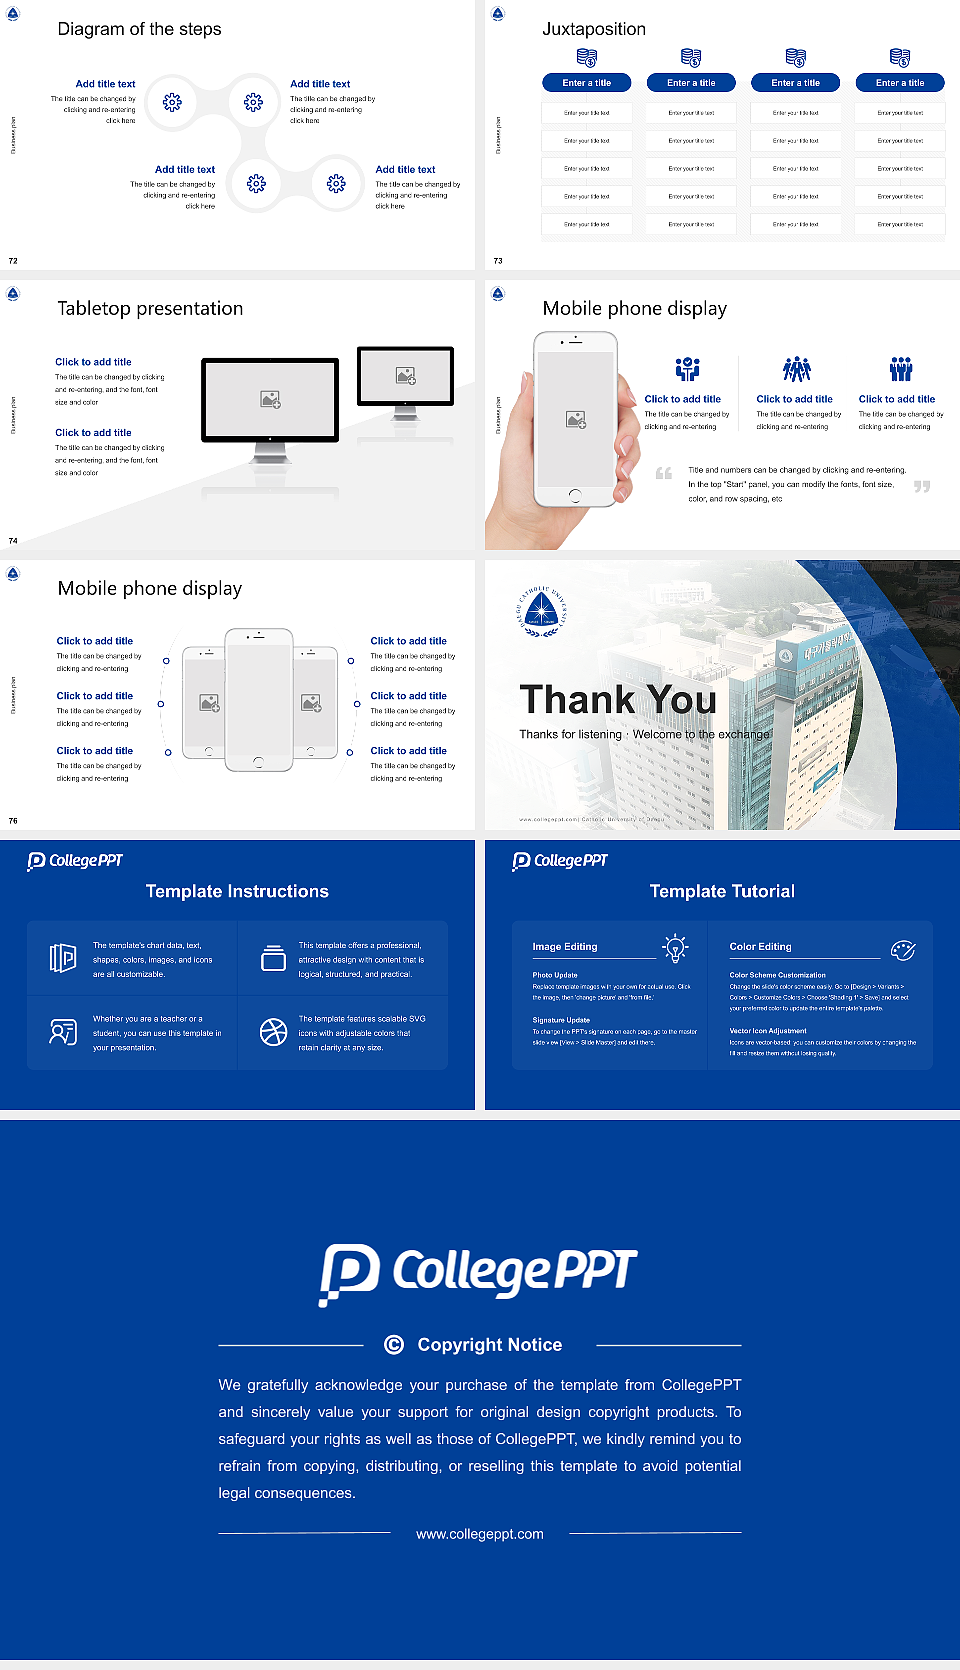 Catholic University of Daegu Competition/Entrepreneurship Contest PPT Template_Slide preview image9